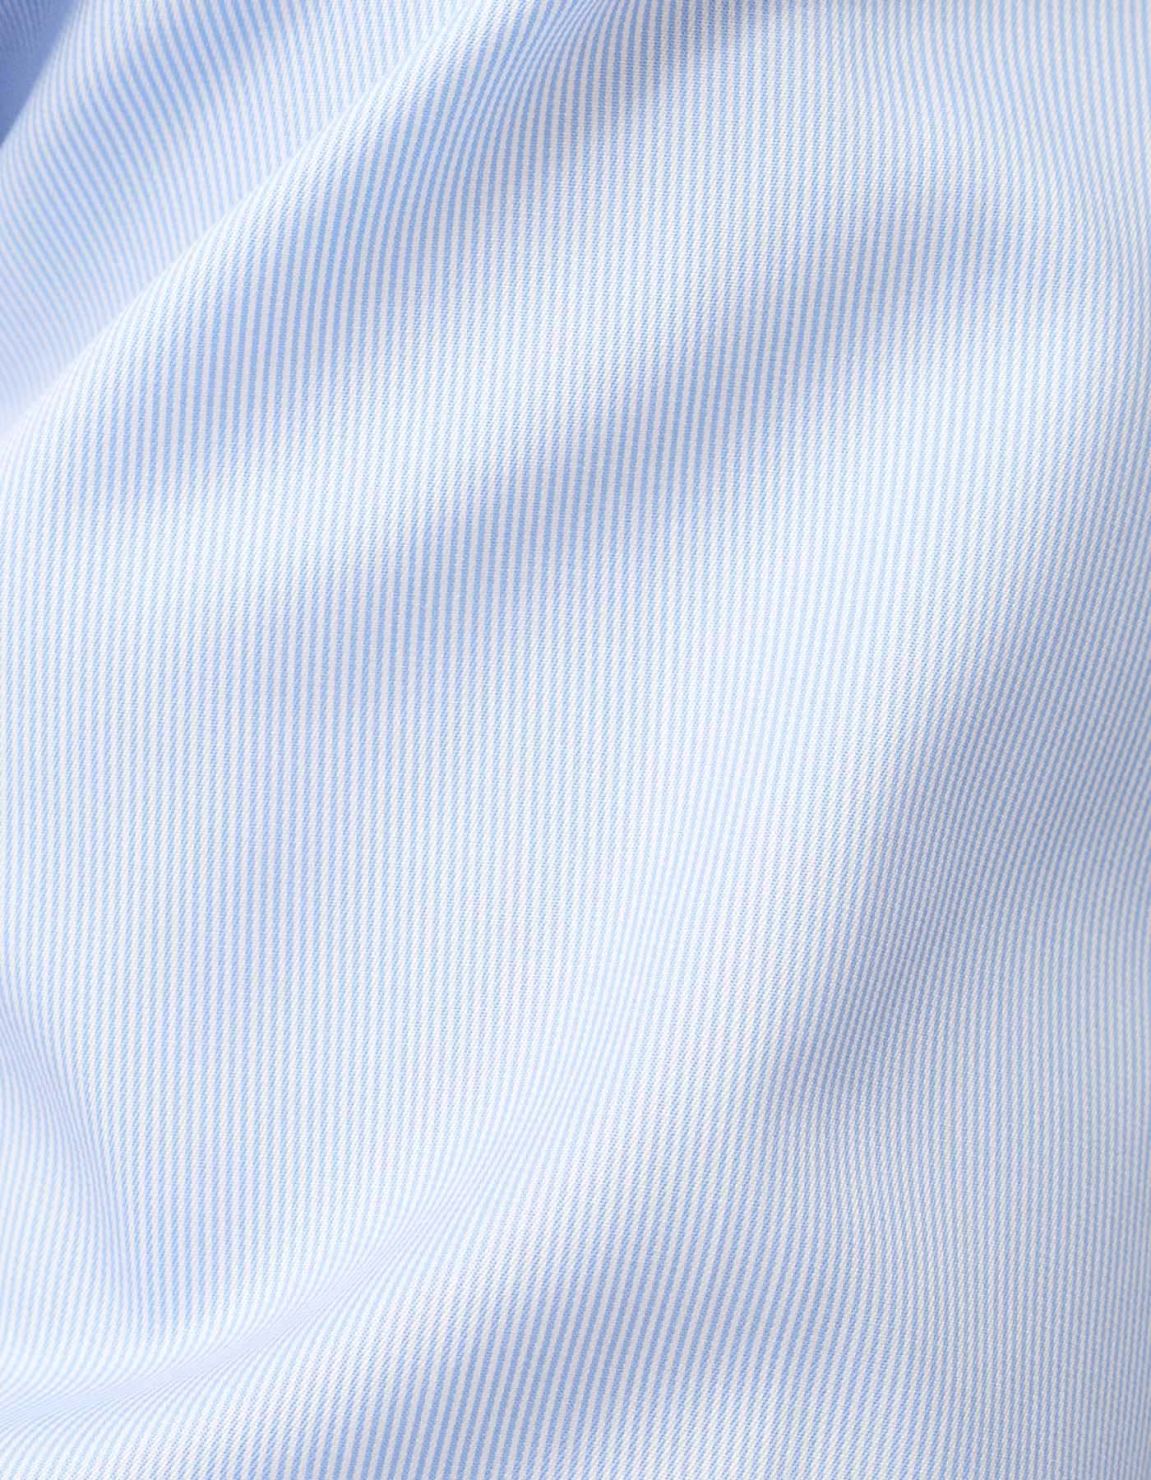 Shirt Collar cutaway Light Blue Twill Tailor Custom Fit 2